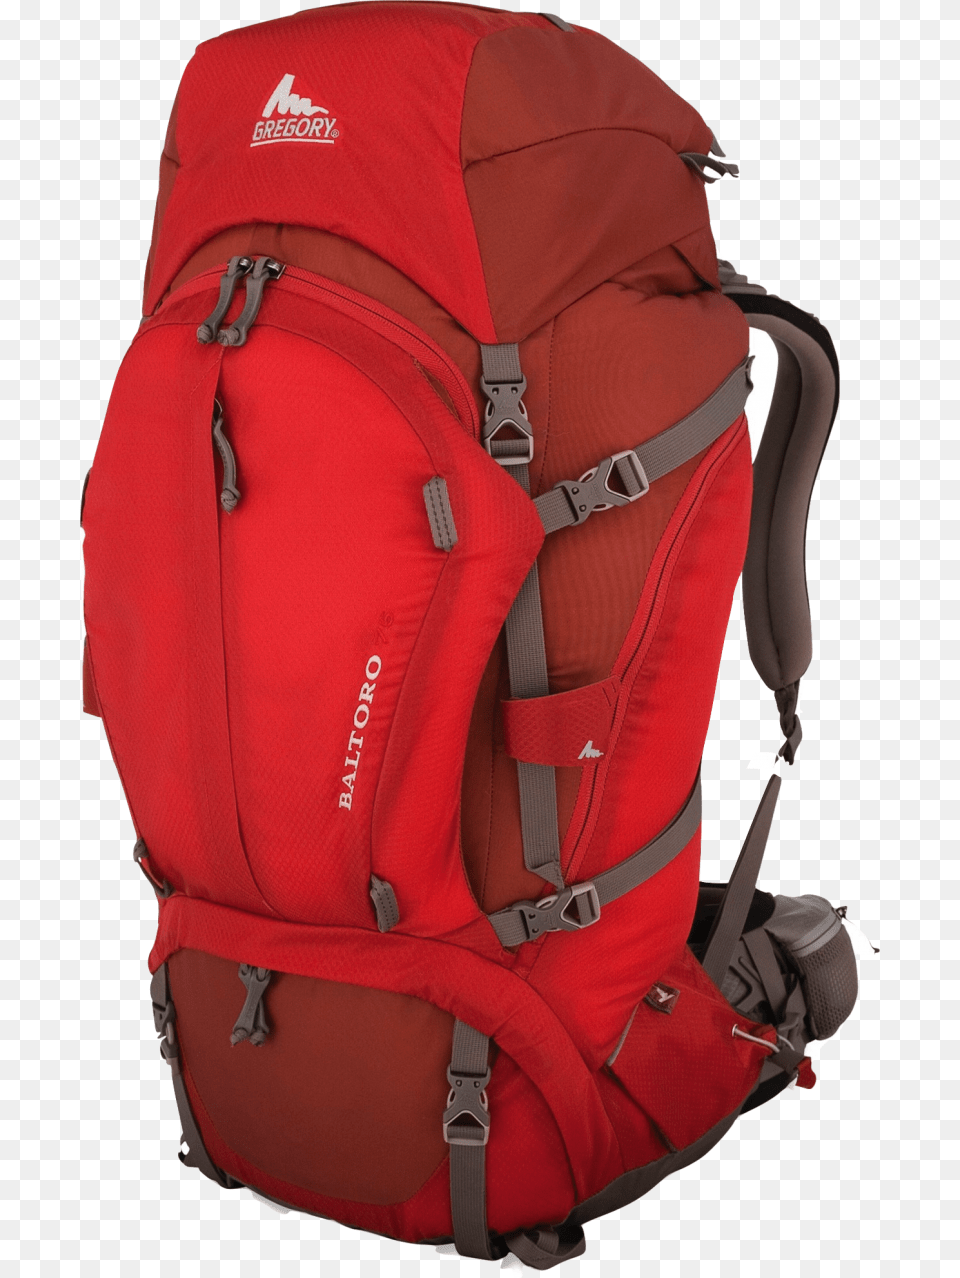 Gregory Baltoro Tourist Bag Image Tourist Bag, Backpack Free Transparent Png